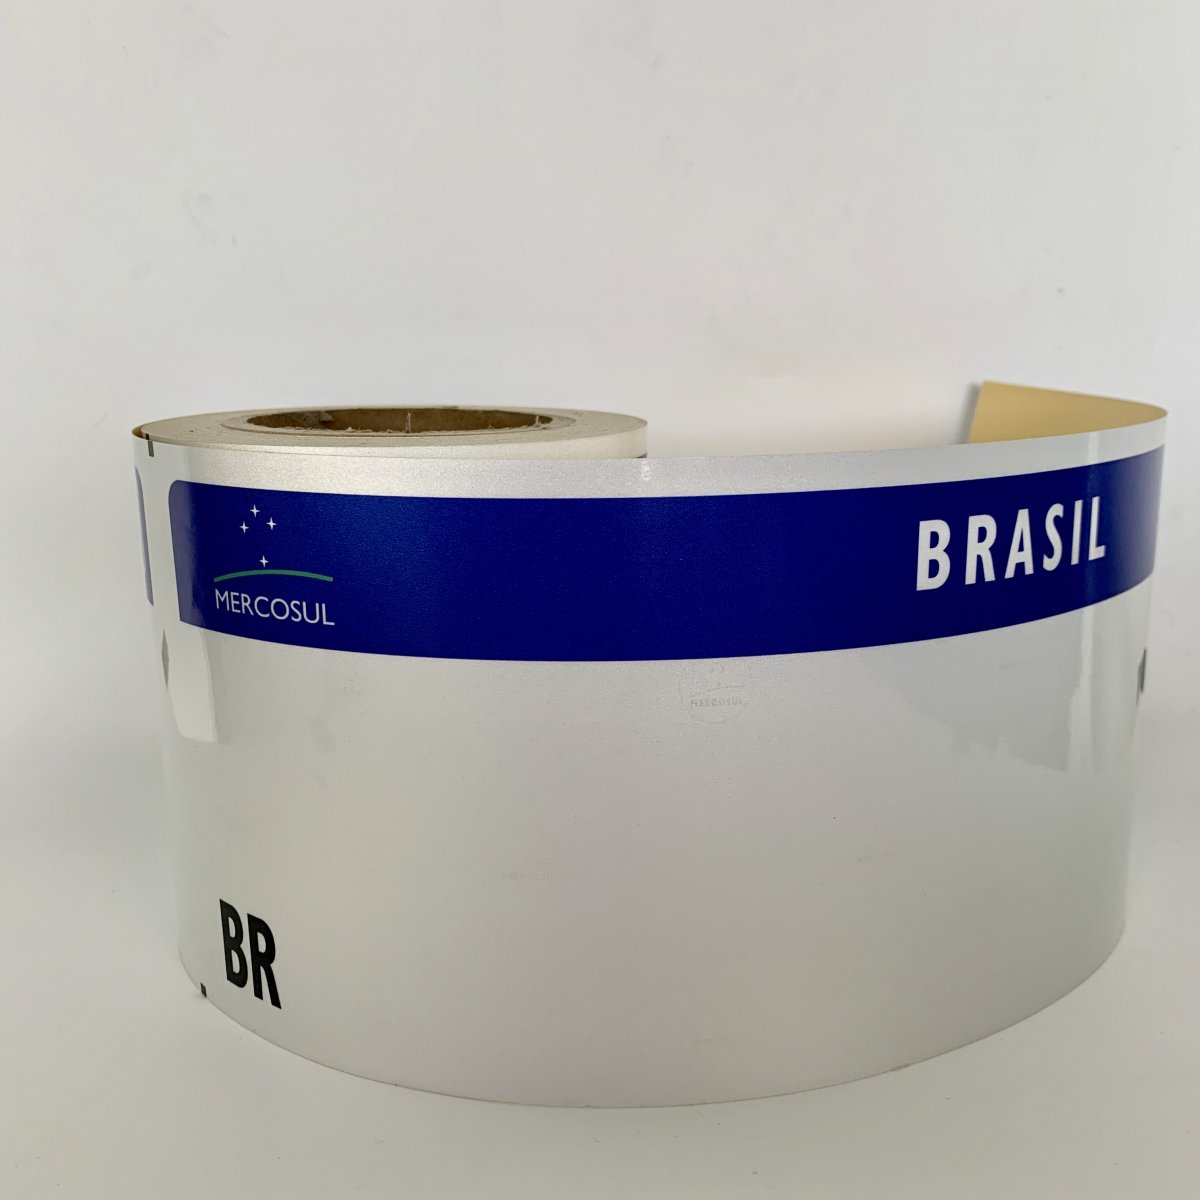 brazil mercosur license plate reflective sheeting